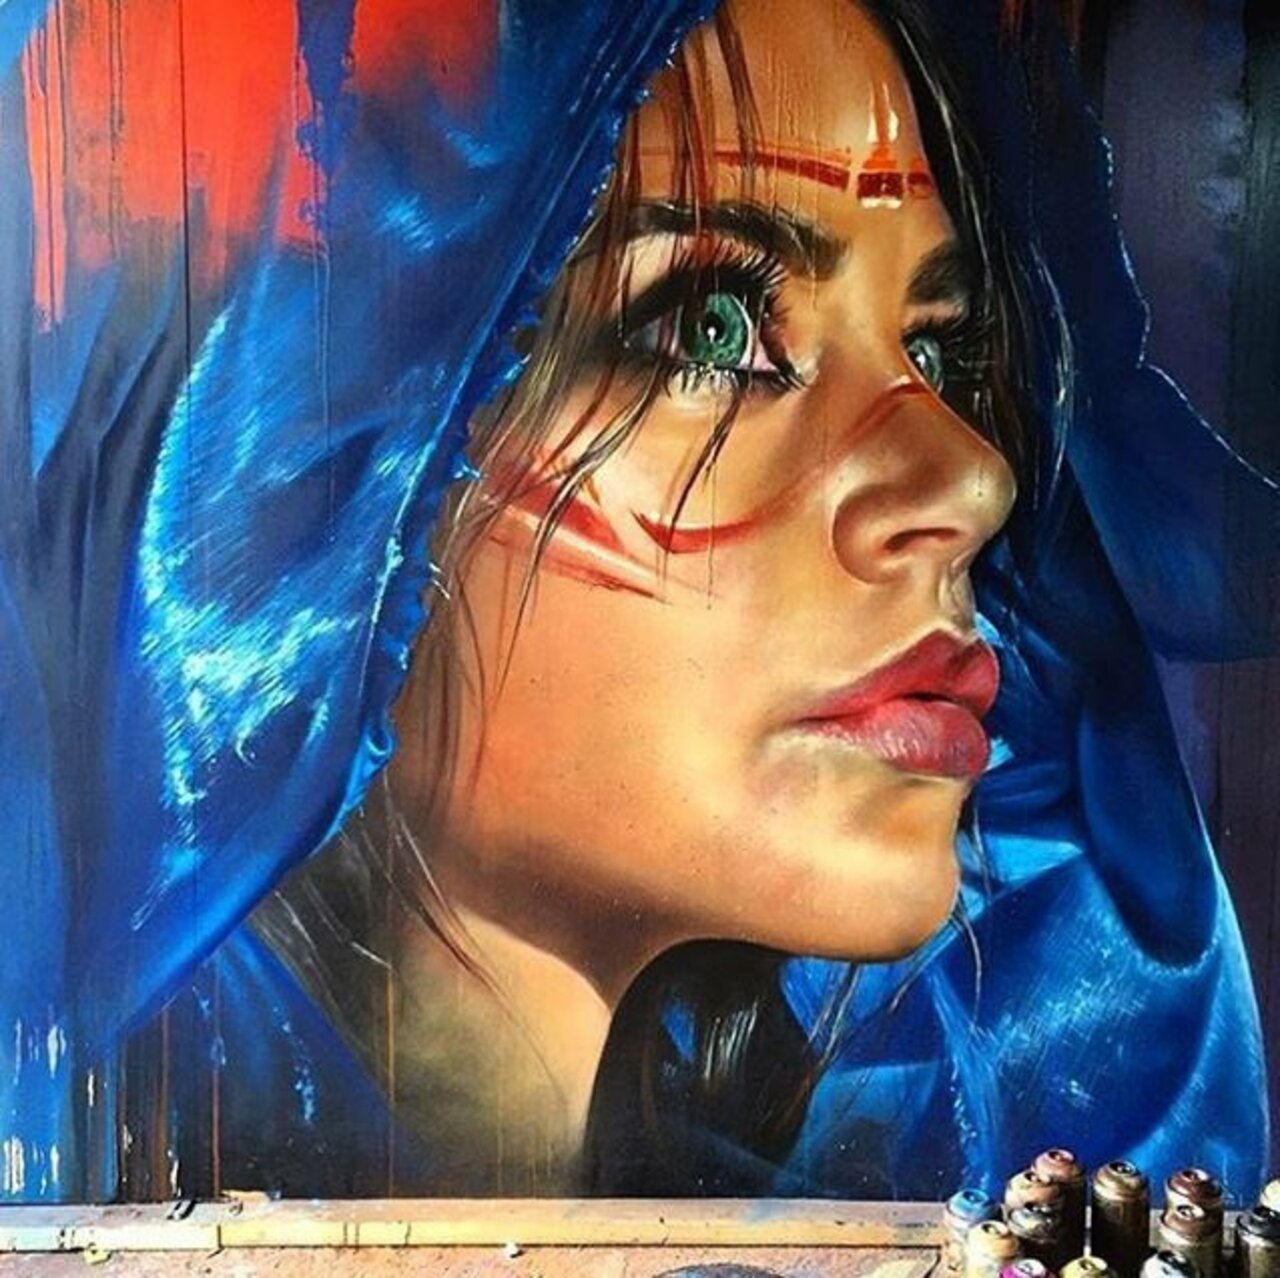 #mural by Adnate #Australia #streetart #art #urbanart #graffiti https://t.co/QDYmOHAJGm